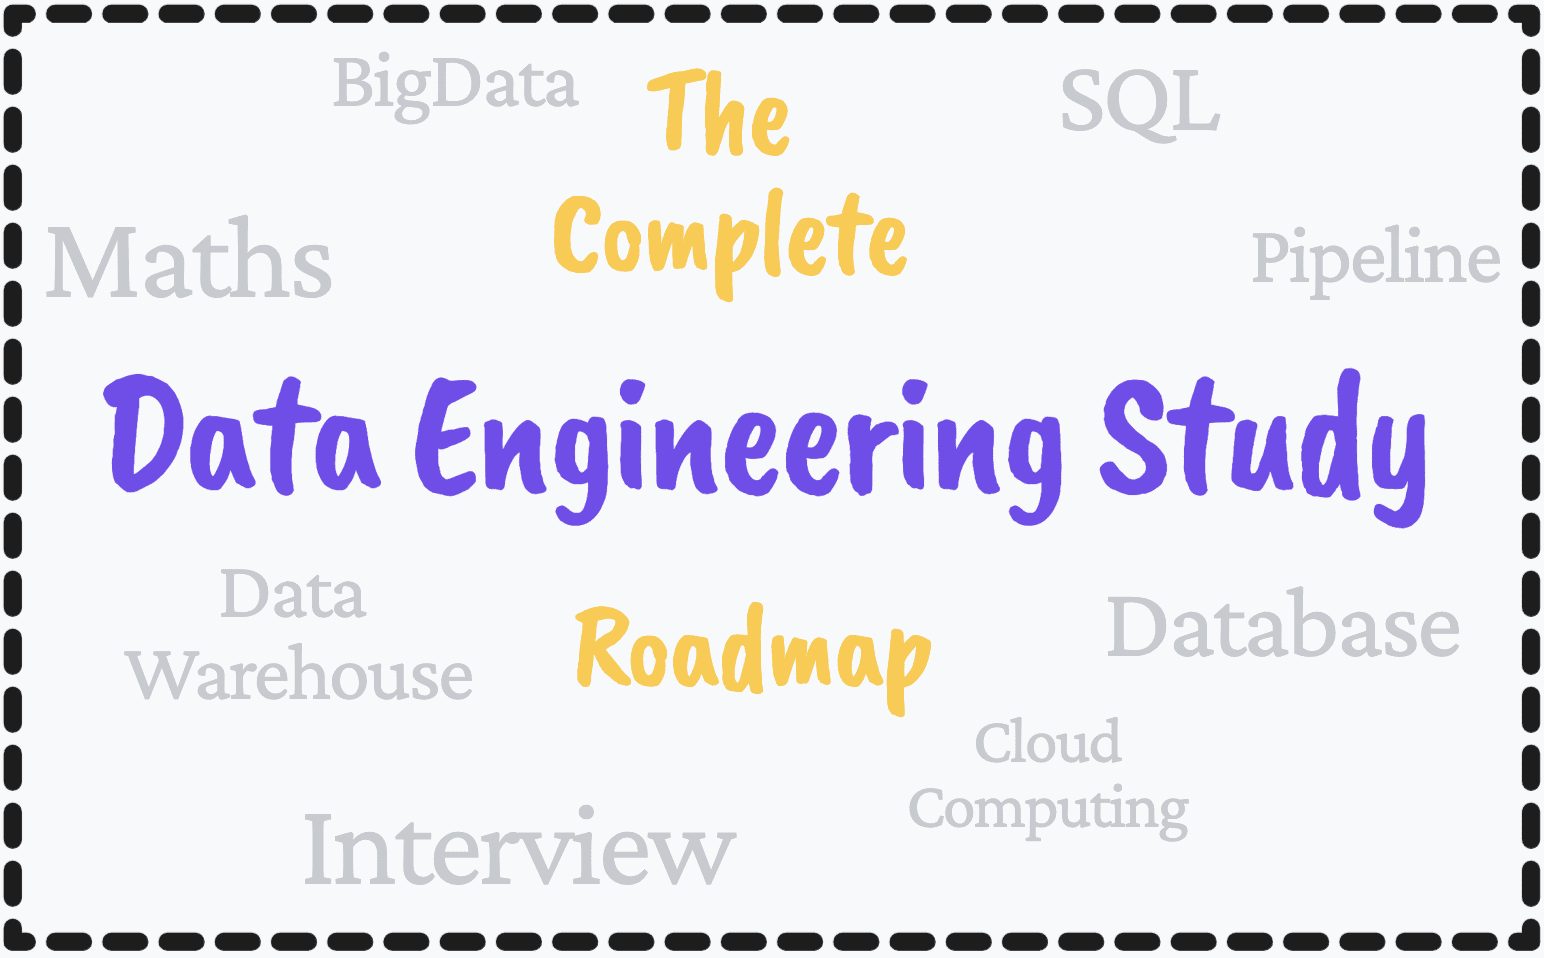 Top Posts November 28 – December 4: The Complete Data Engineering Study Roadmap